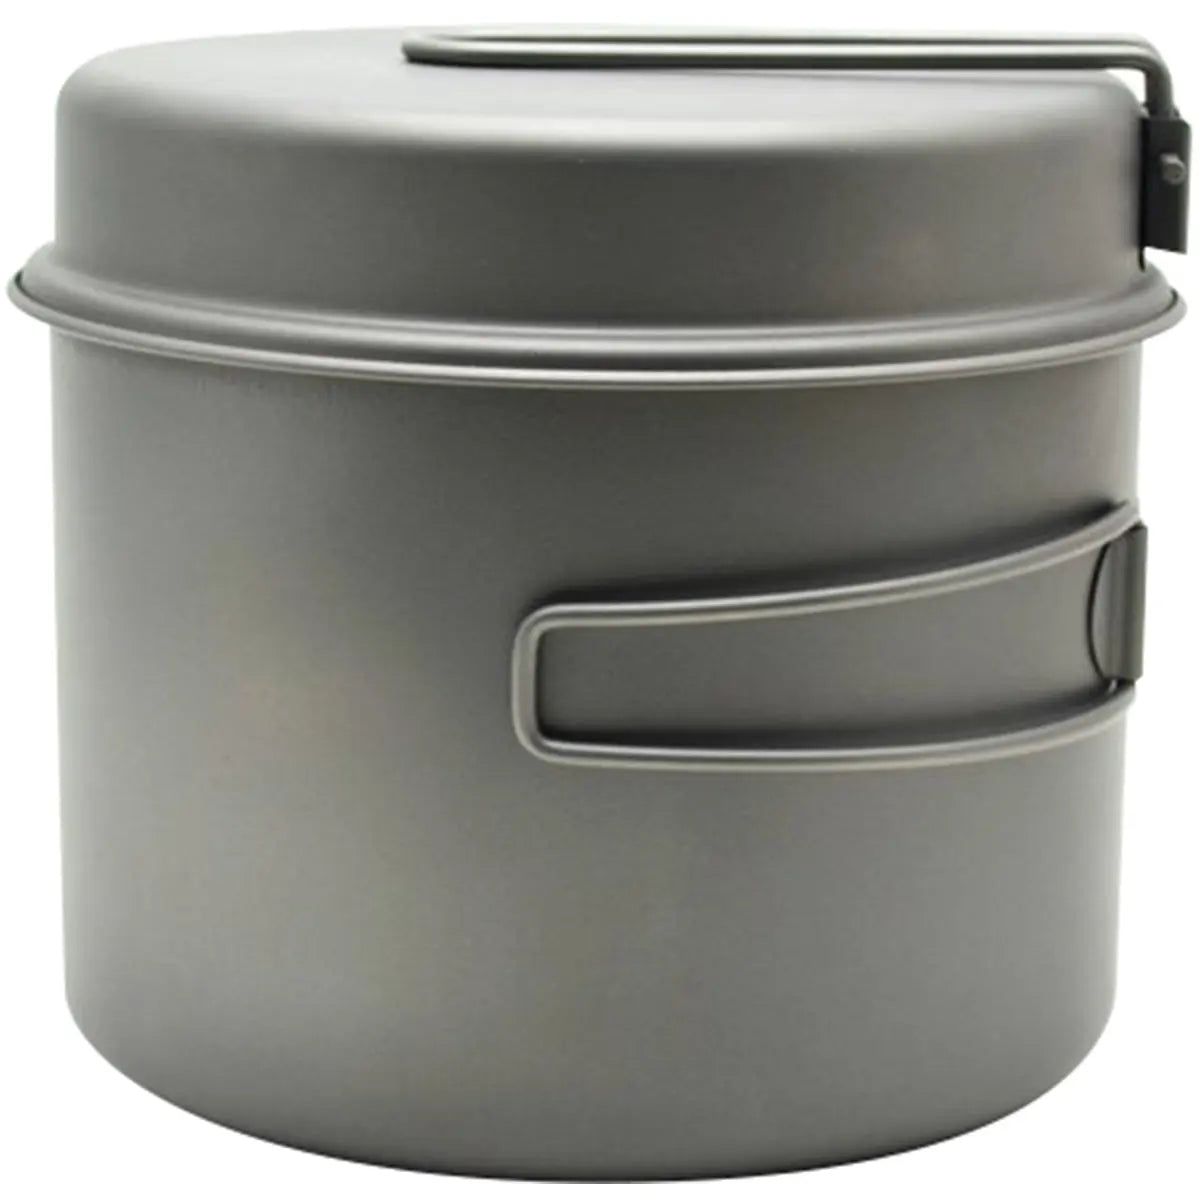 TOAKS Titanium Outdoor Camping Cook Pot with Pan and Foldable Handles TOAKS